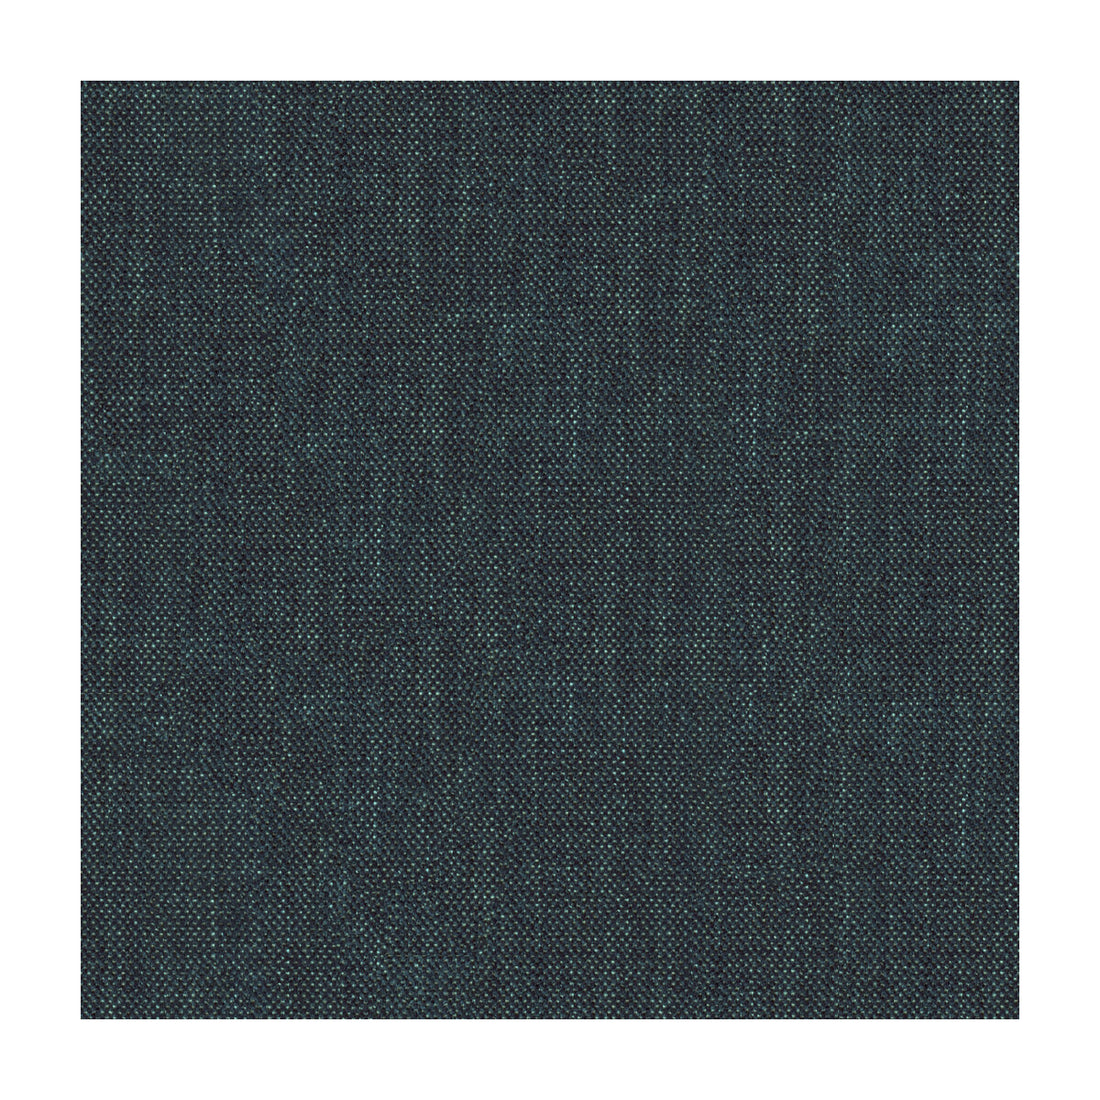 Kravet Smart fabric in 33577-5 color - pattern 33577.5.0 - by Kravet Smart